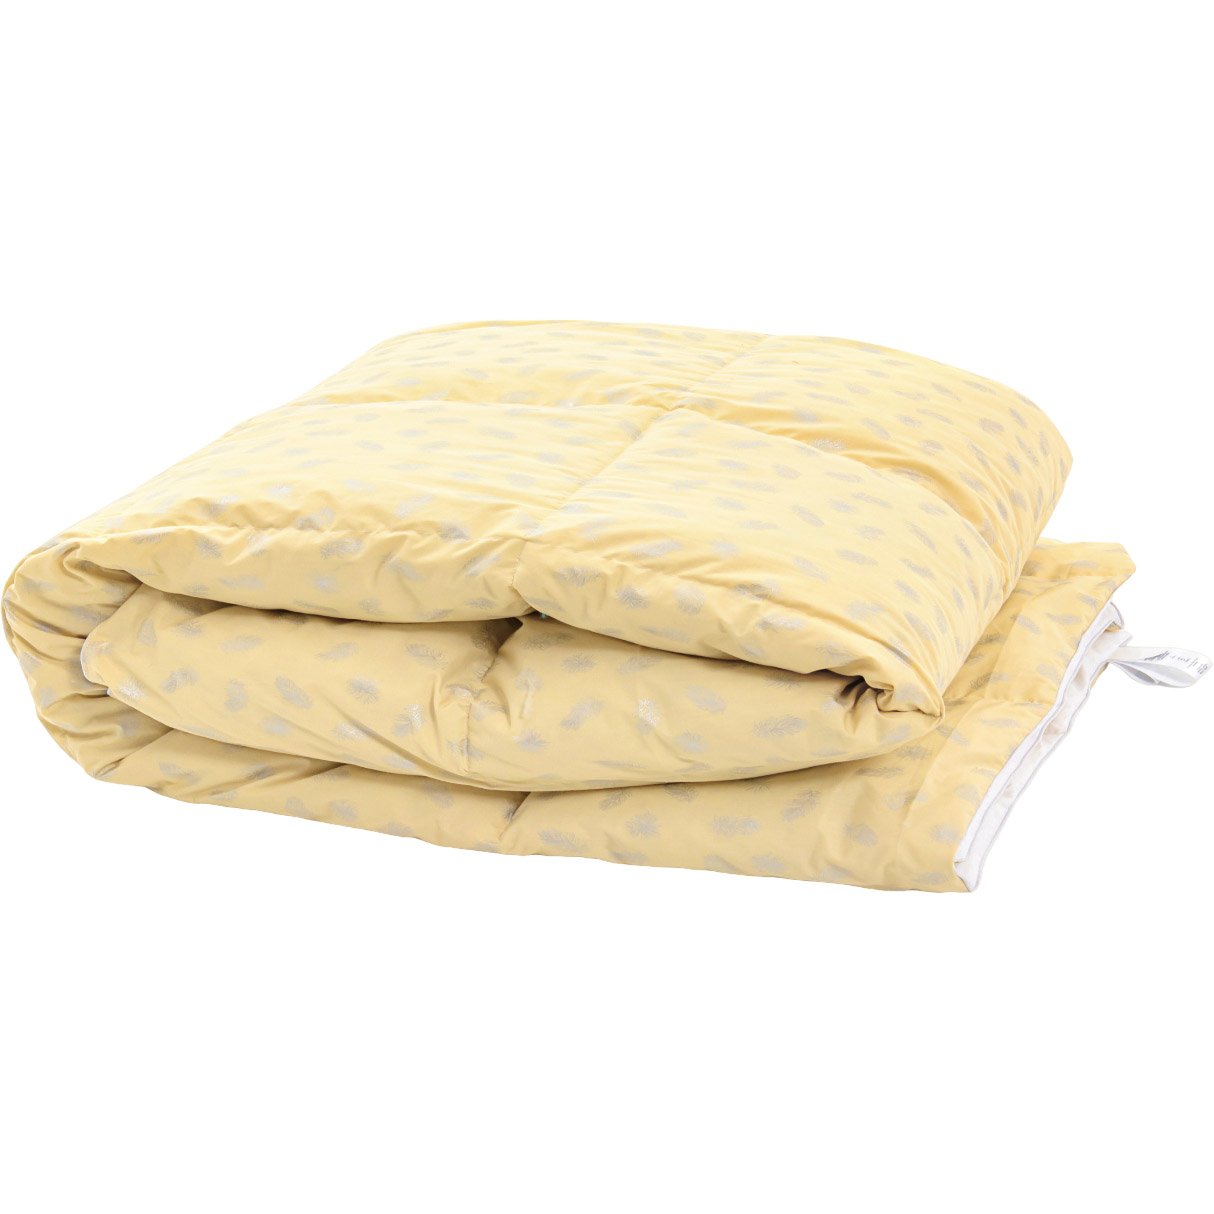 Одеяло пуховое MirSon Karmen №1833 Bio-Beige, 50% пух, полуторное, 215x155, бежевое (2200003013153) - фото 1